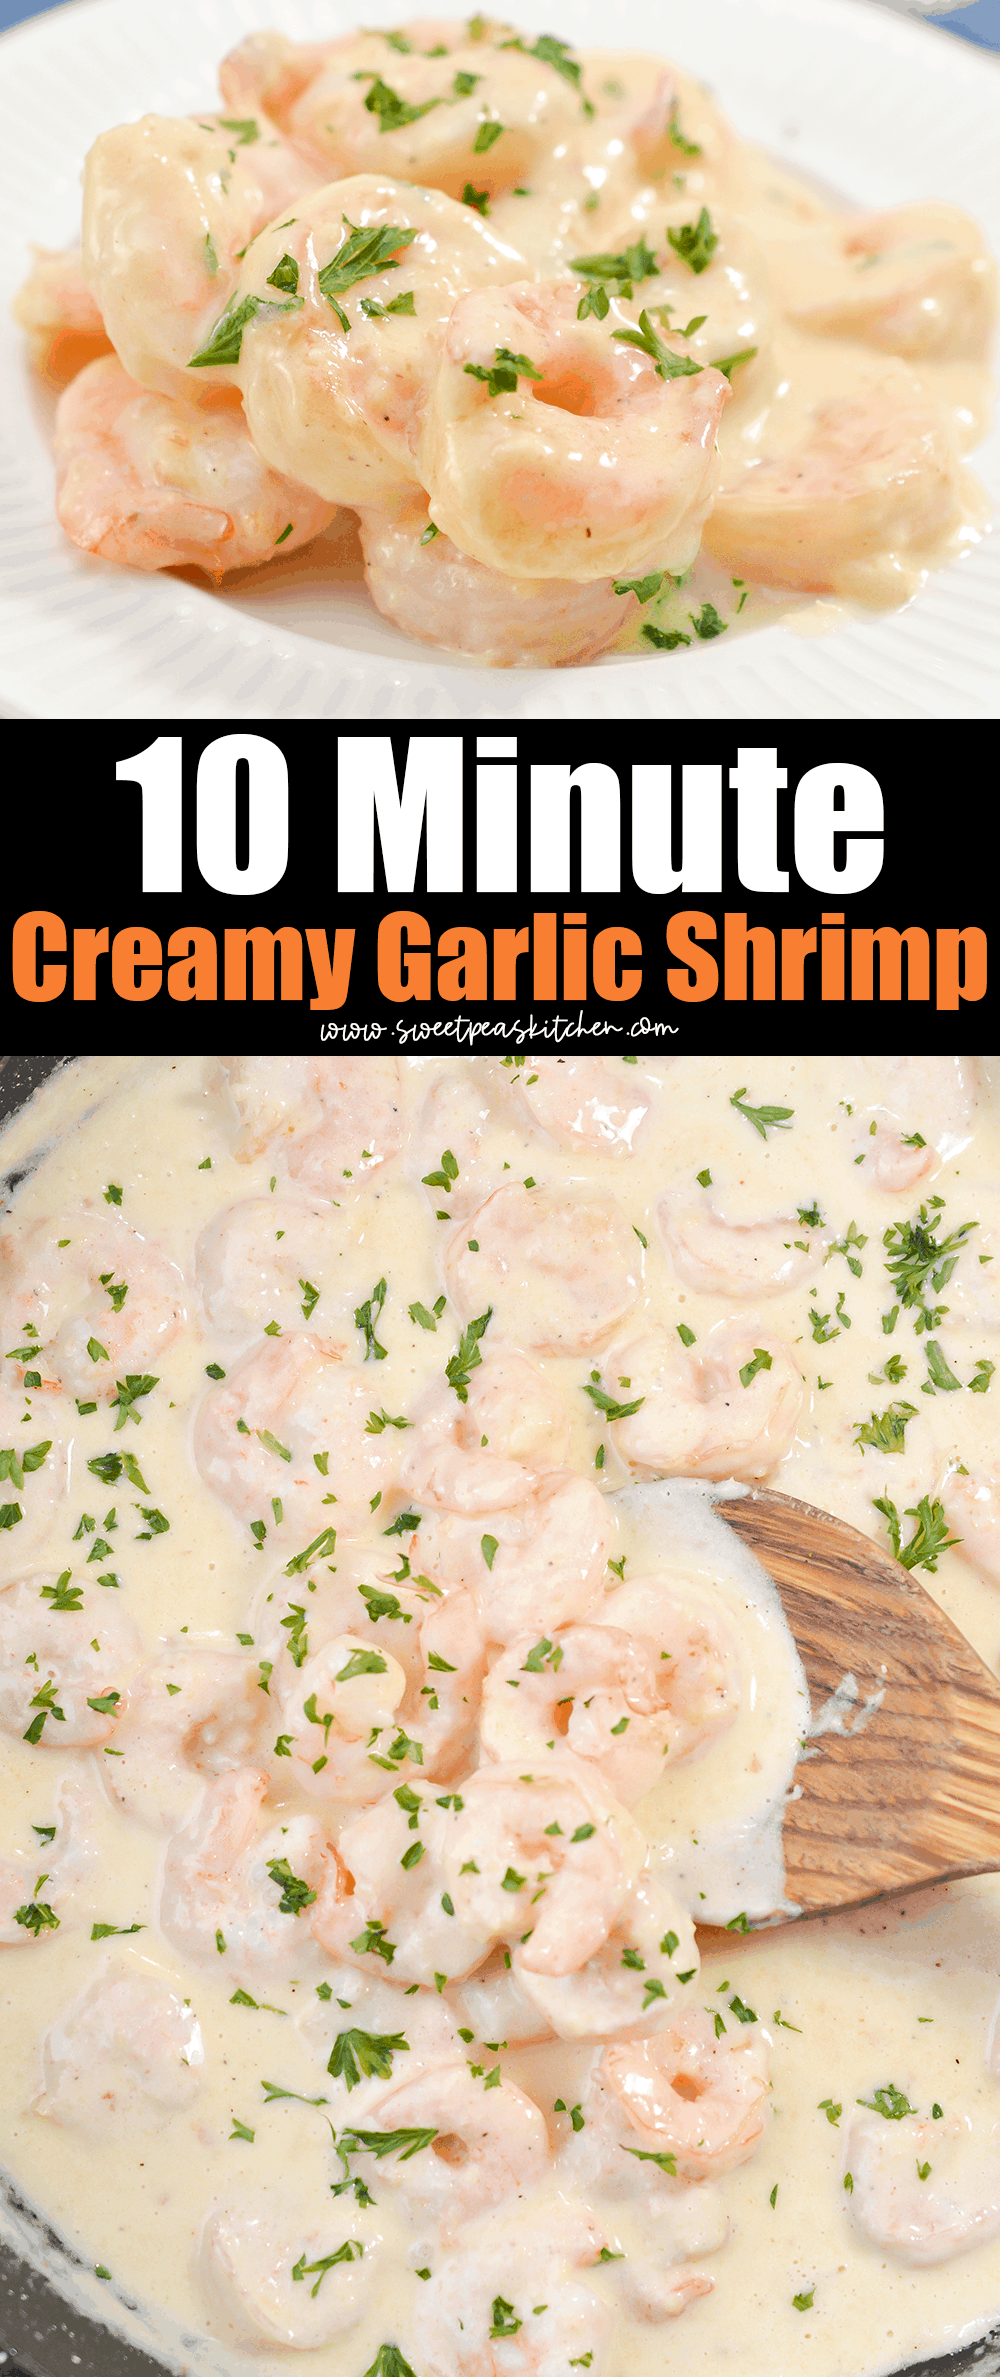 10 Minute Creamy Garlic Shrimp